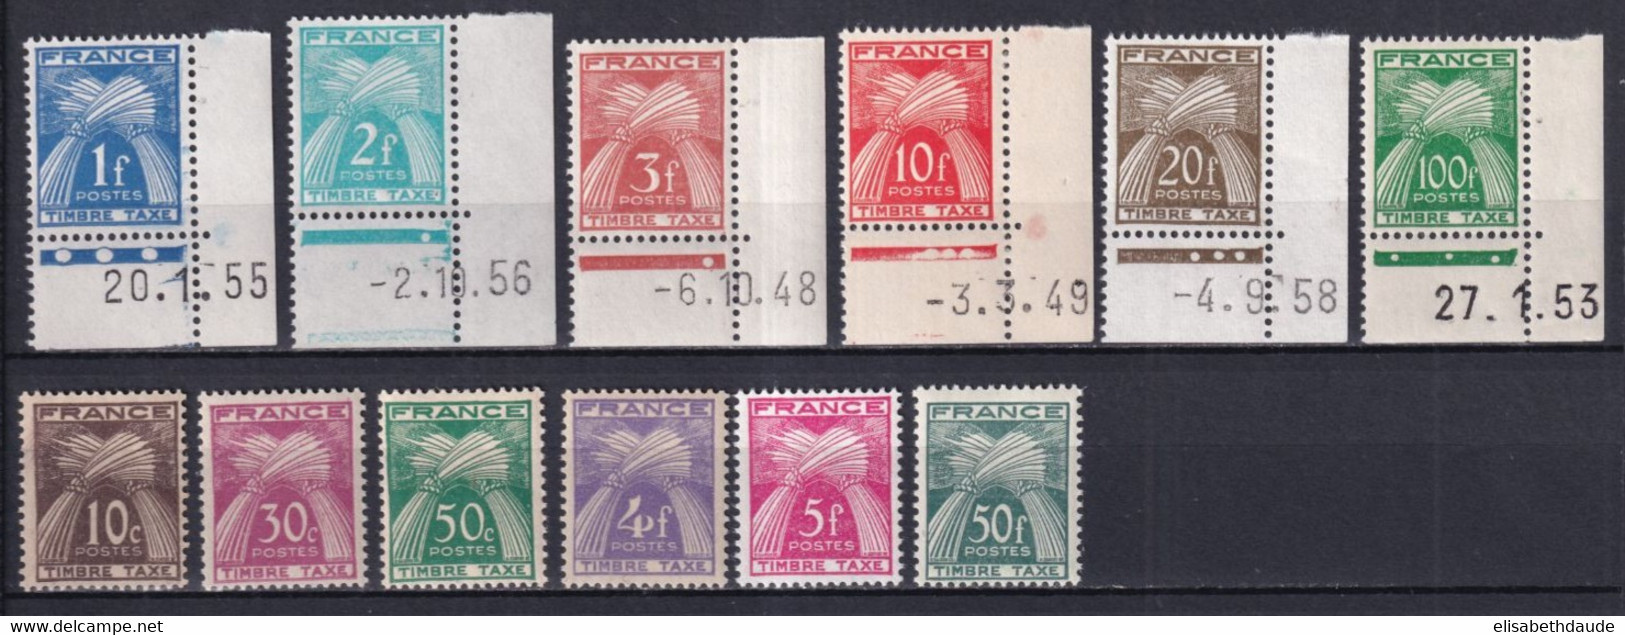 1946/55 - TAXE - YVERT N° 78/89 ** MNH - COTE = 140 EUR. - 1859-1959 Nuevos